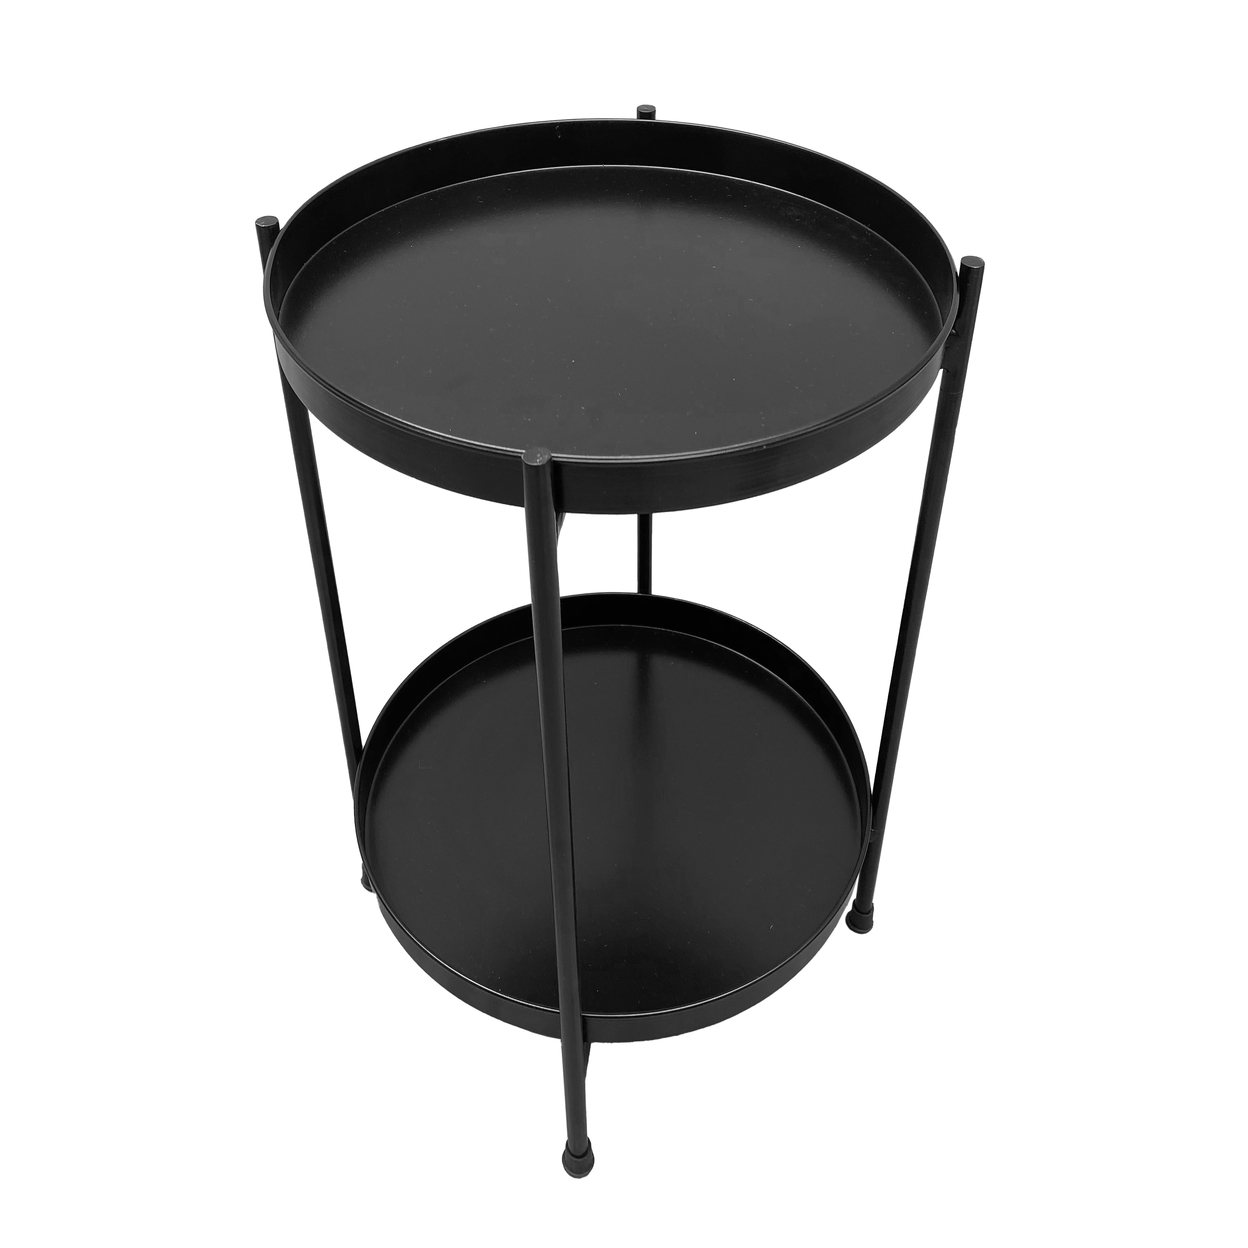 15 Inch Modern Side End Table, Metal Round Tray Top, Foldable Legs, Black -Saltoro Sherpi